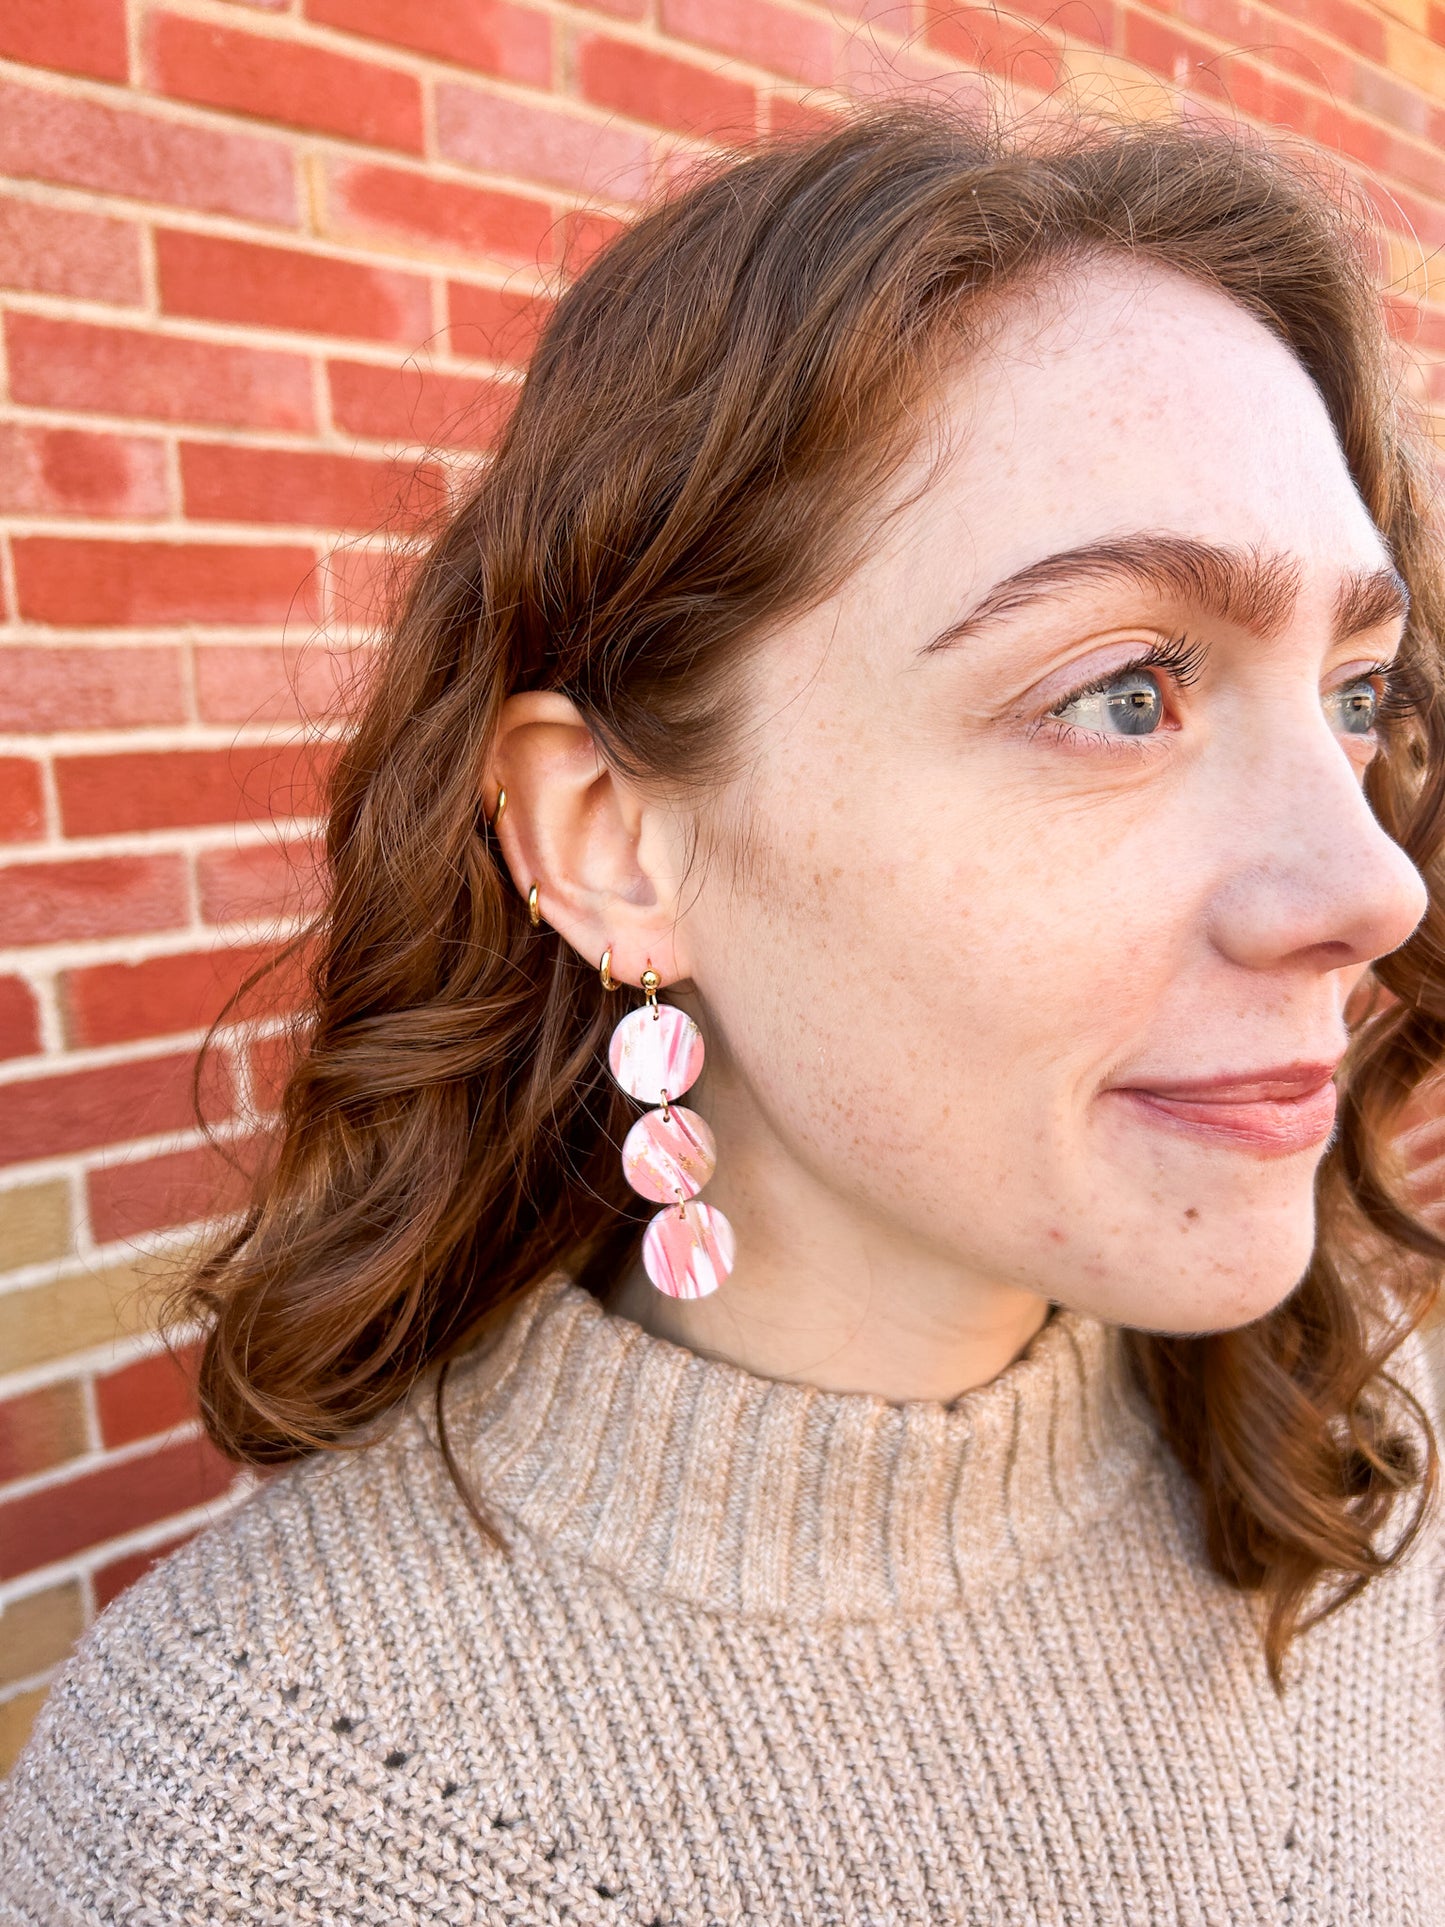 Pretty in Pink Clay Earrings | Princess Style | Fun Spring Style | Lightweight Earrings